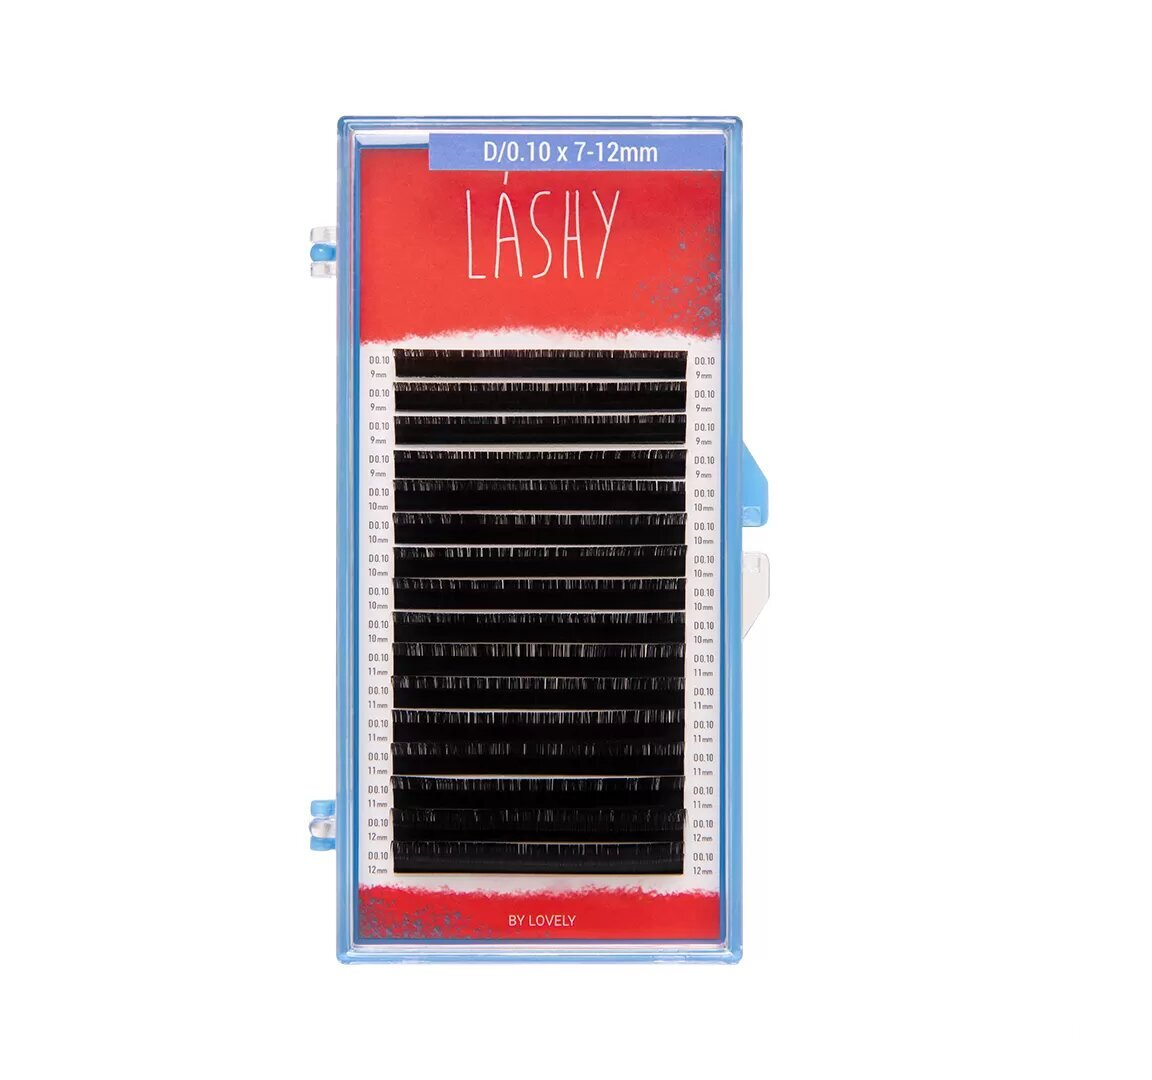 Ресницы Lashy Lovely чёрные 16 линий M 0.07 13 мм клей lovely lashy easy 5 мл